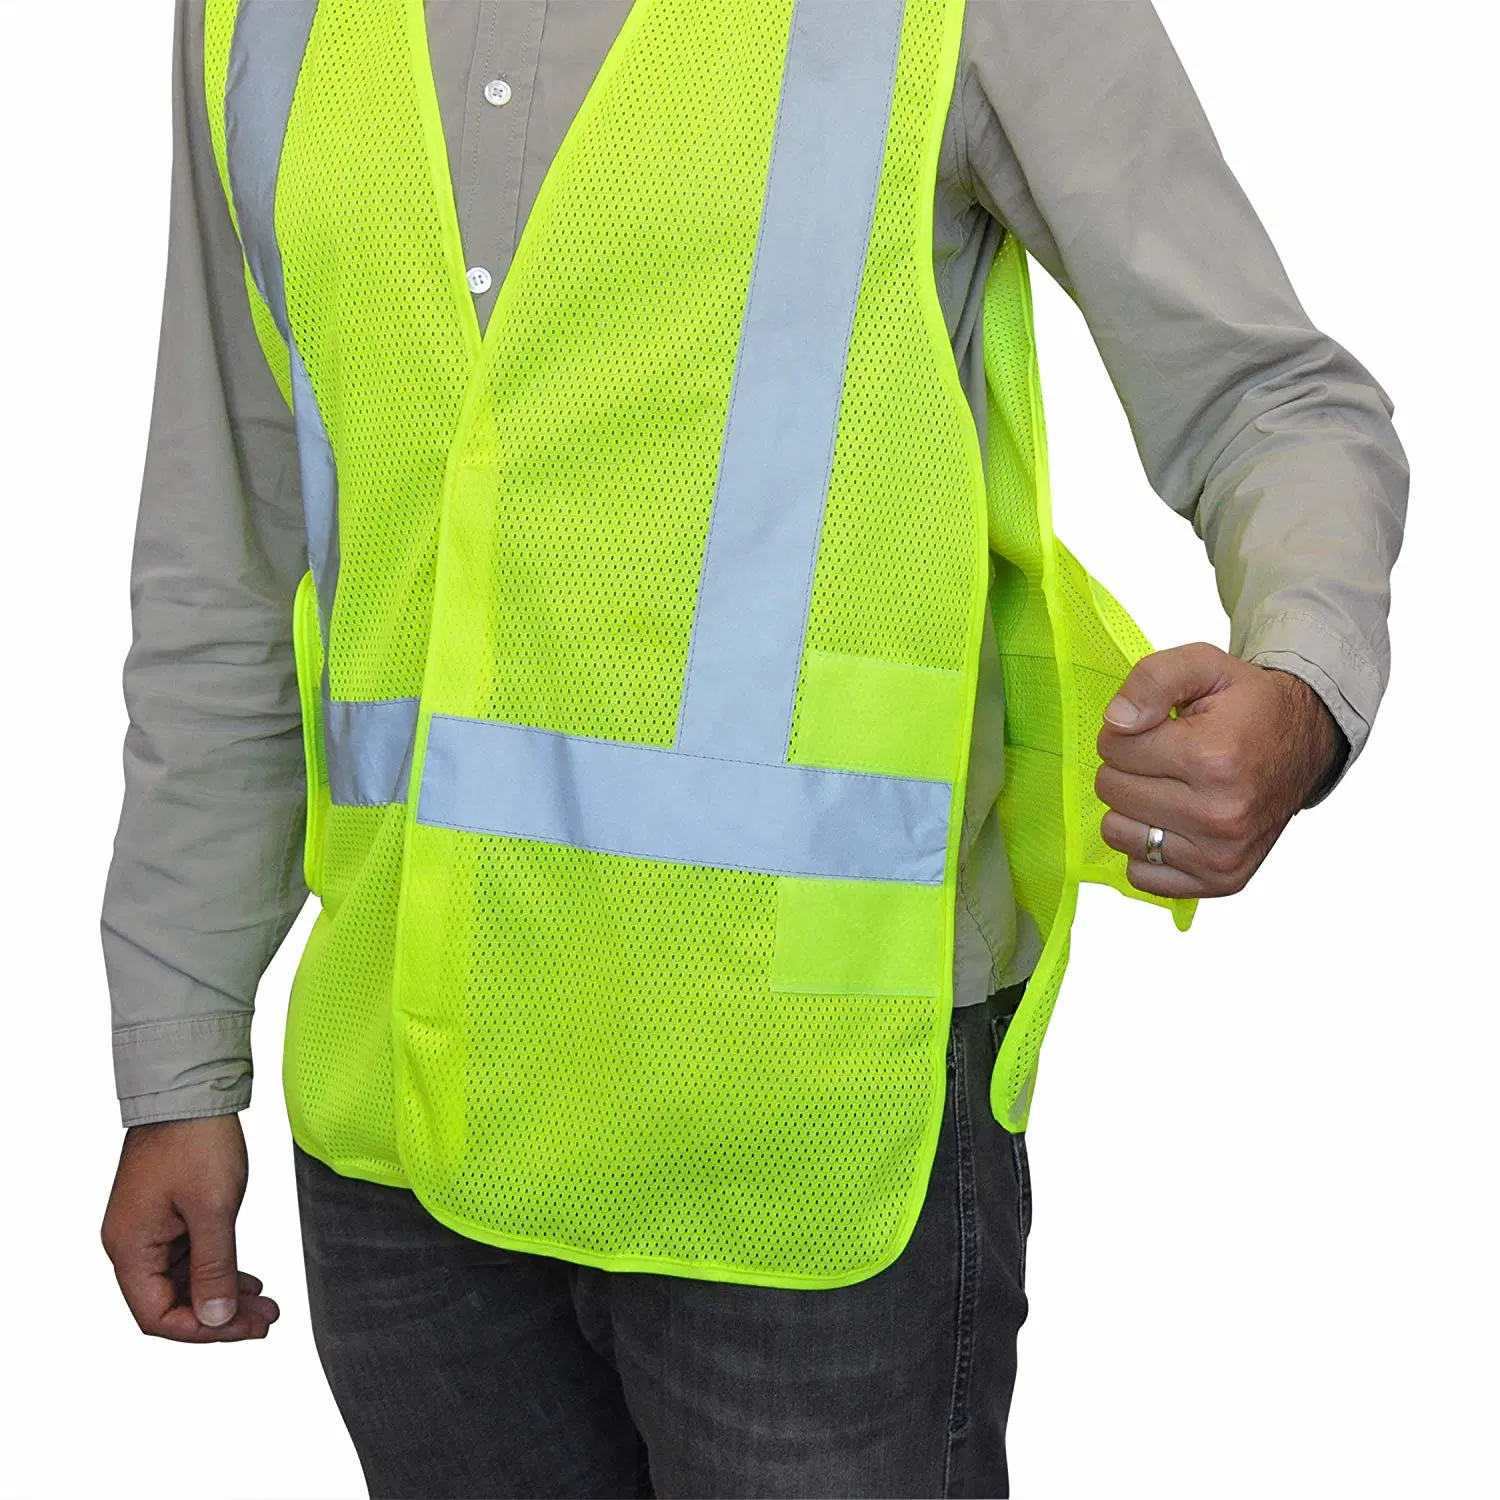 Breathable Mesh Safety Vest Traffic Reflective Vest